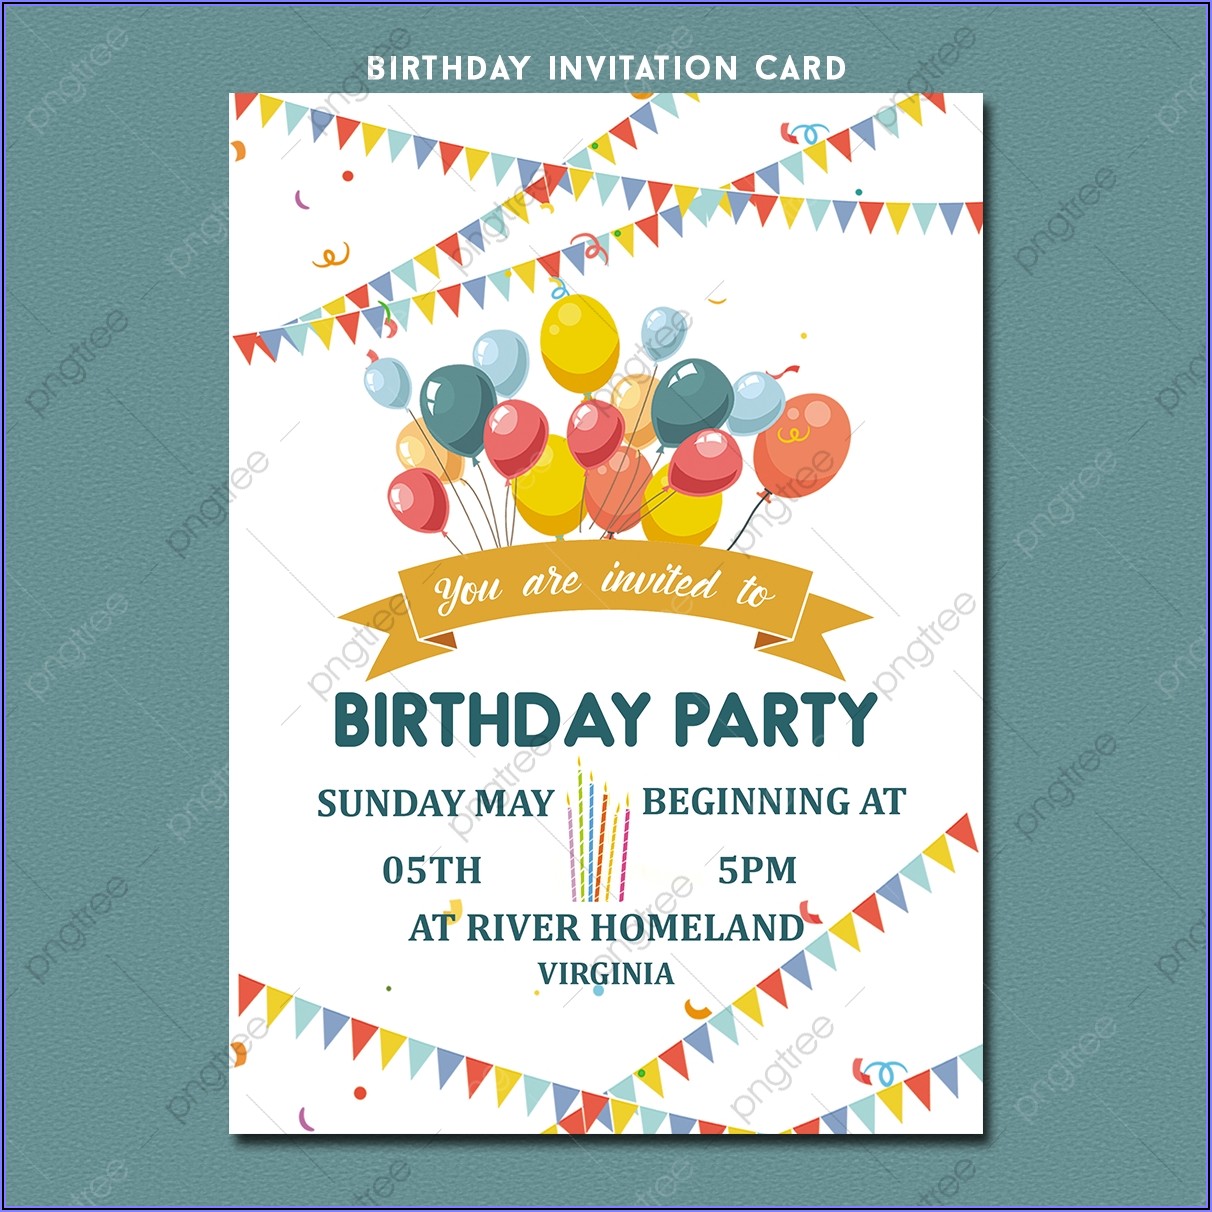 Birthday Invitation Card Free Download